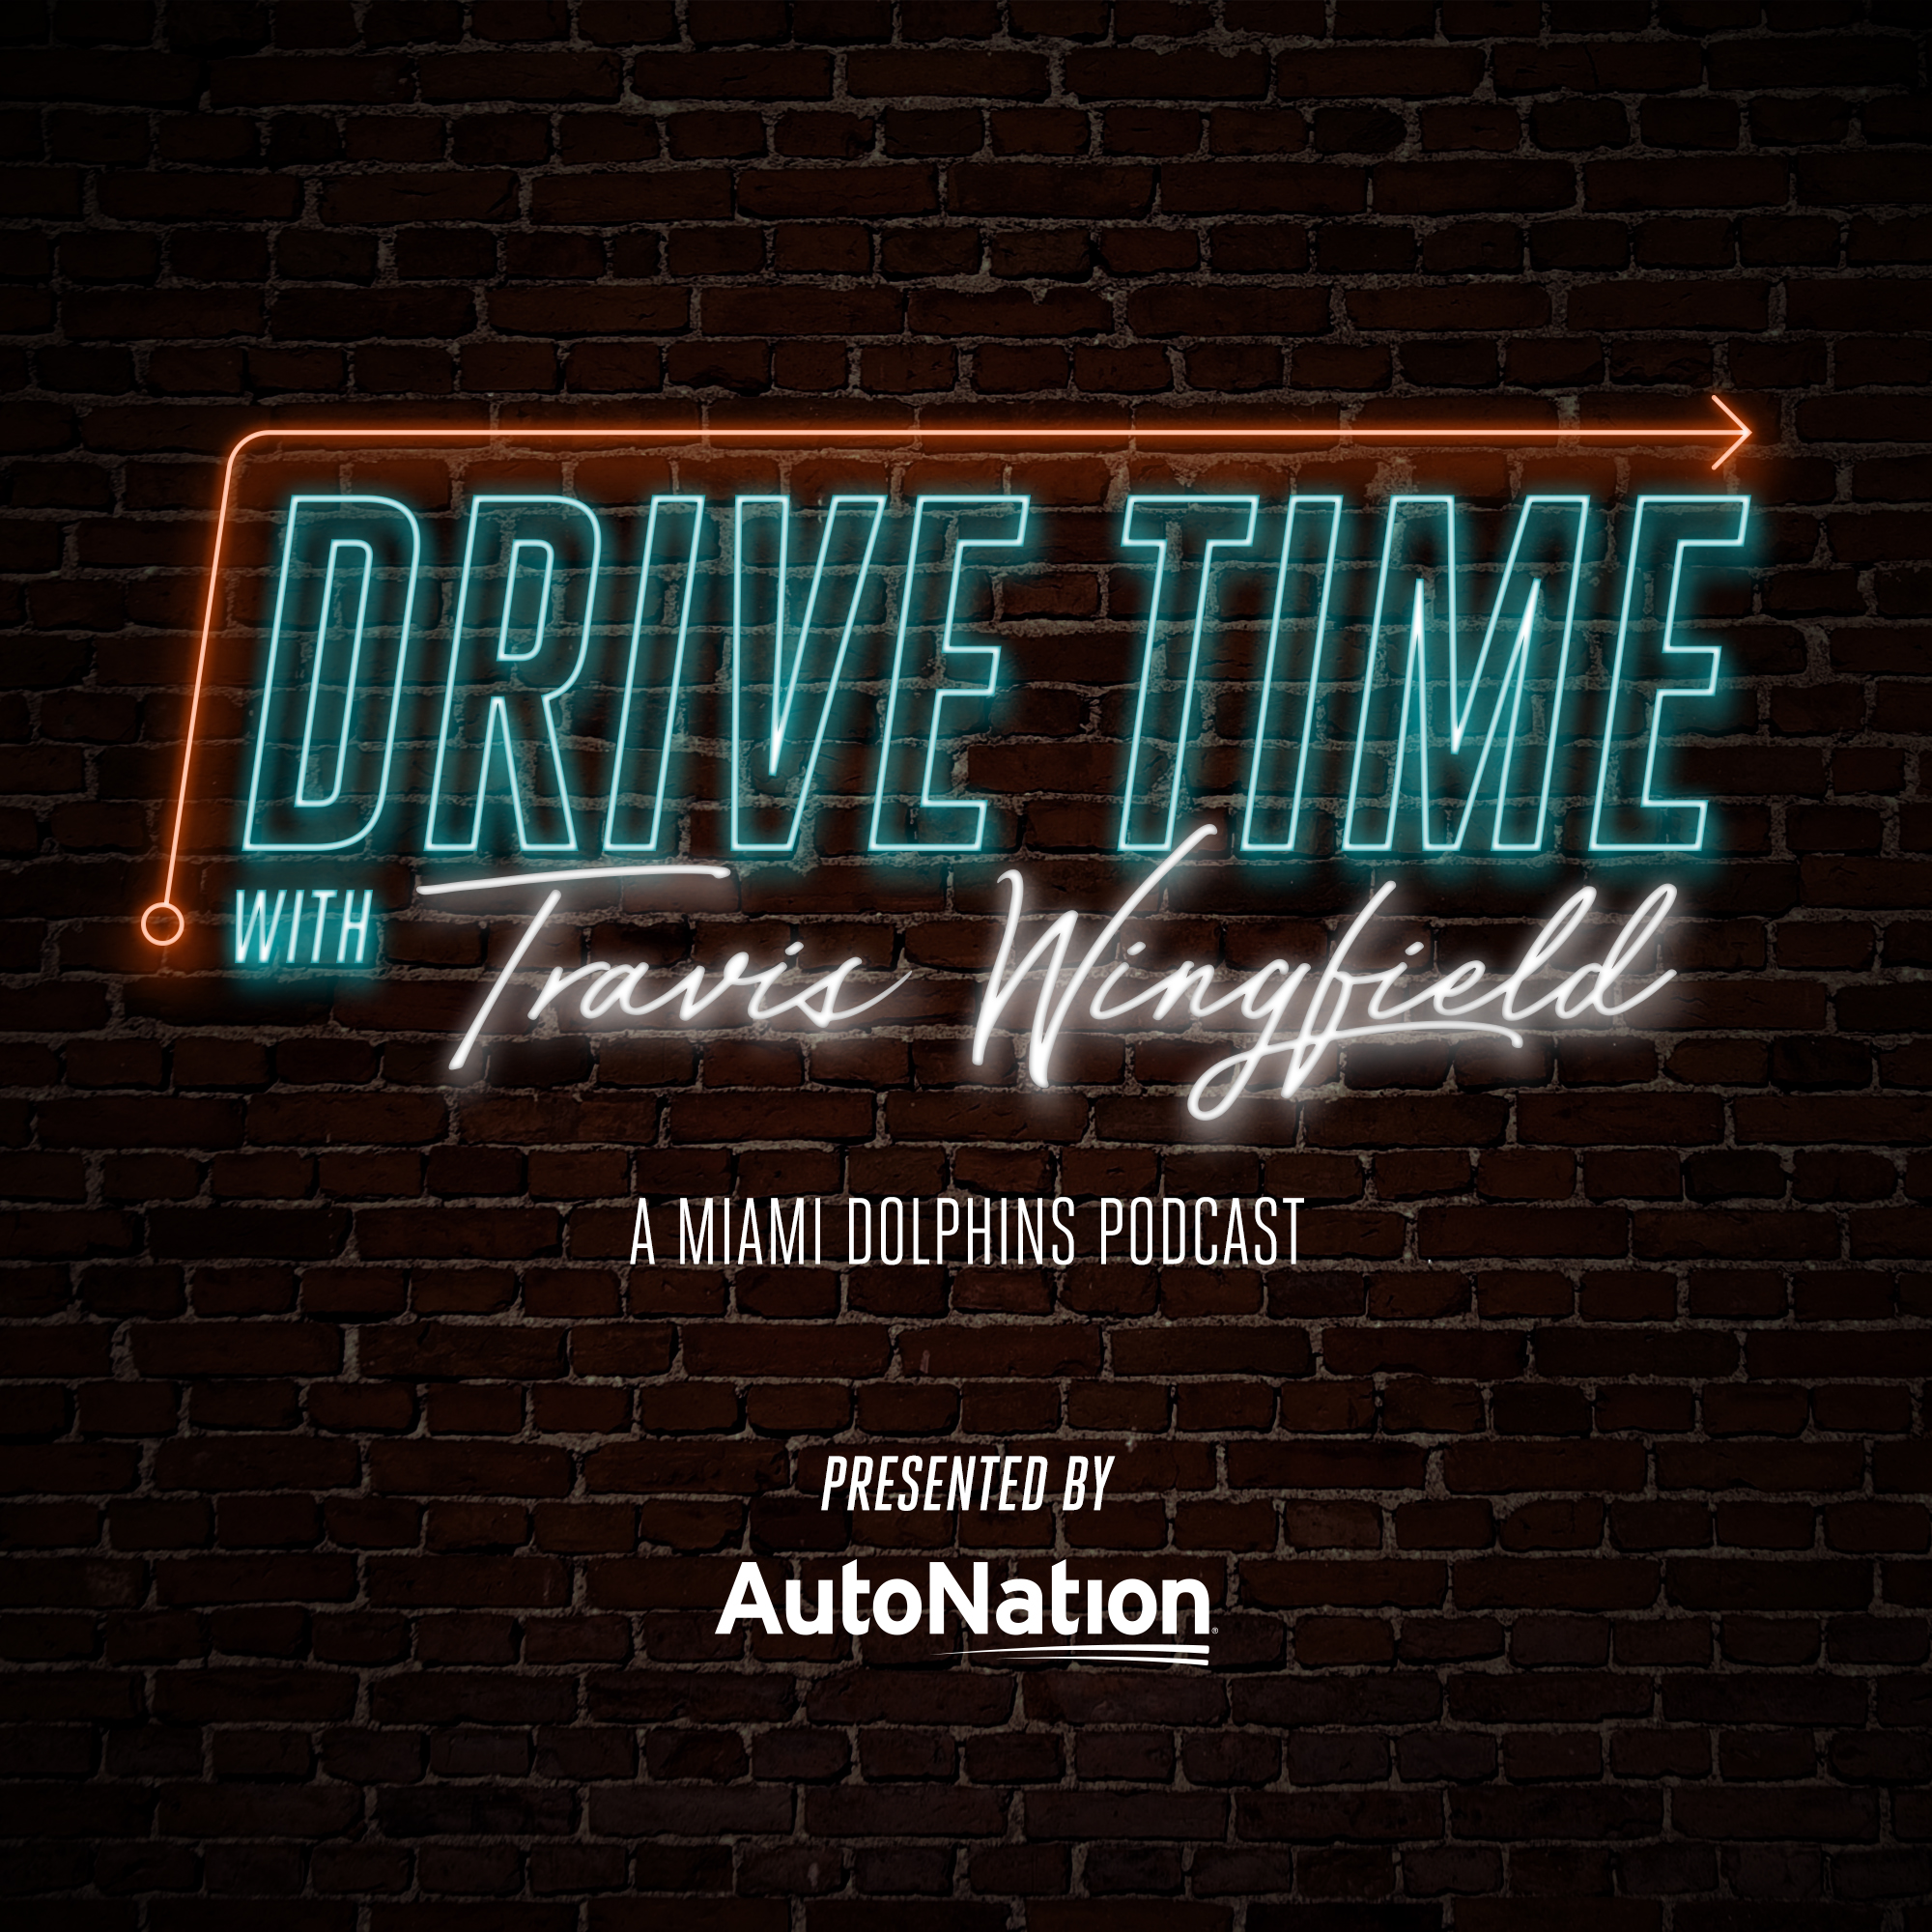 Drive Time - Tape Tuesday with Advanced Metrics